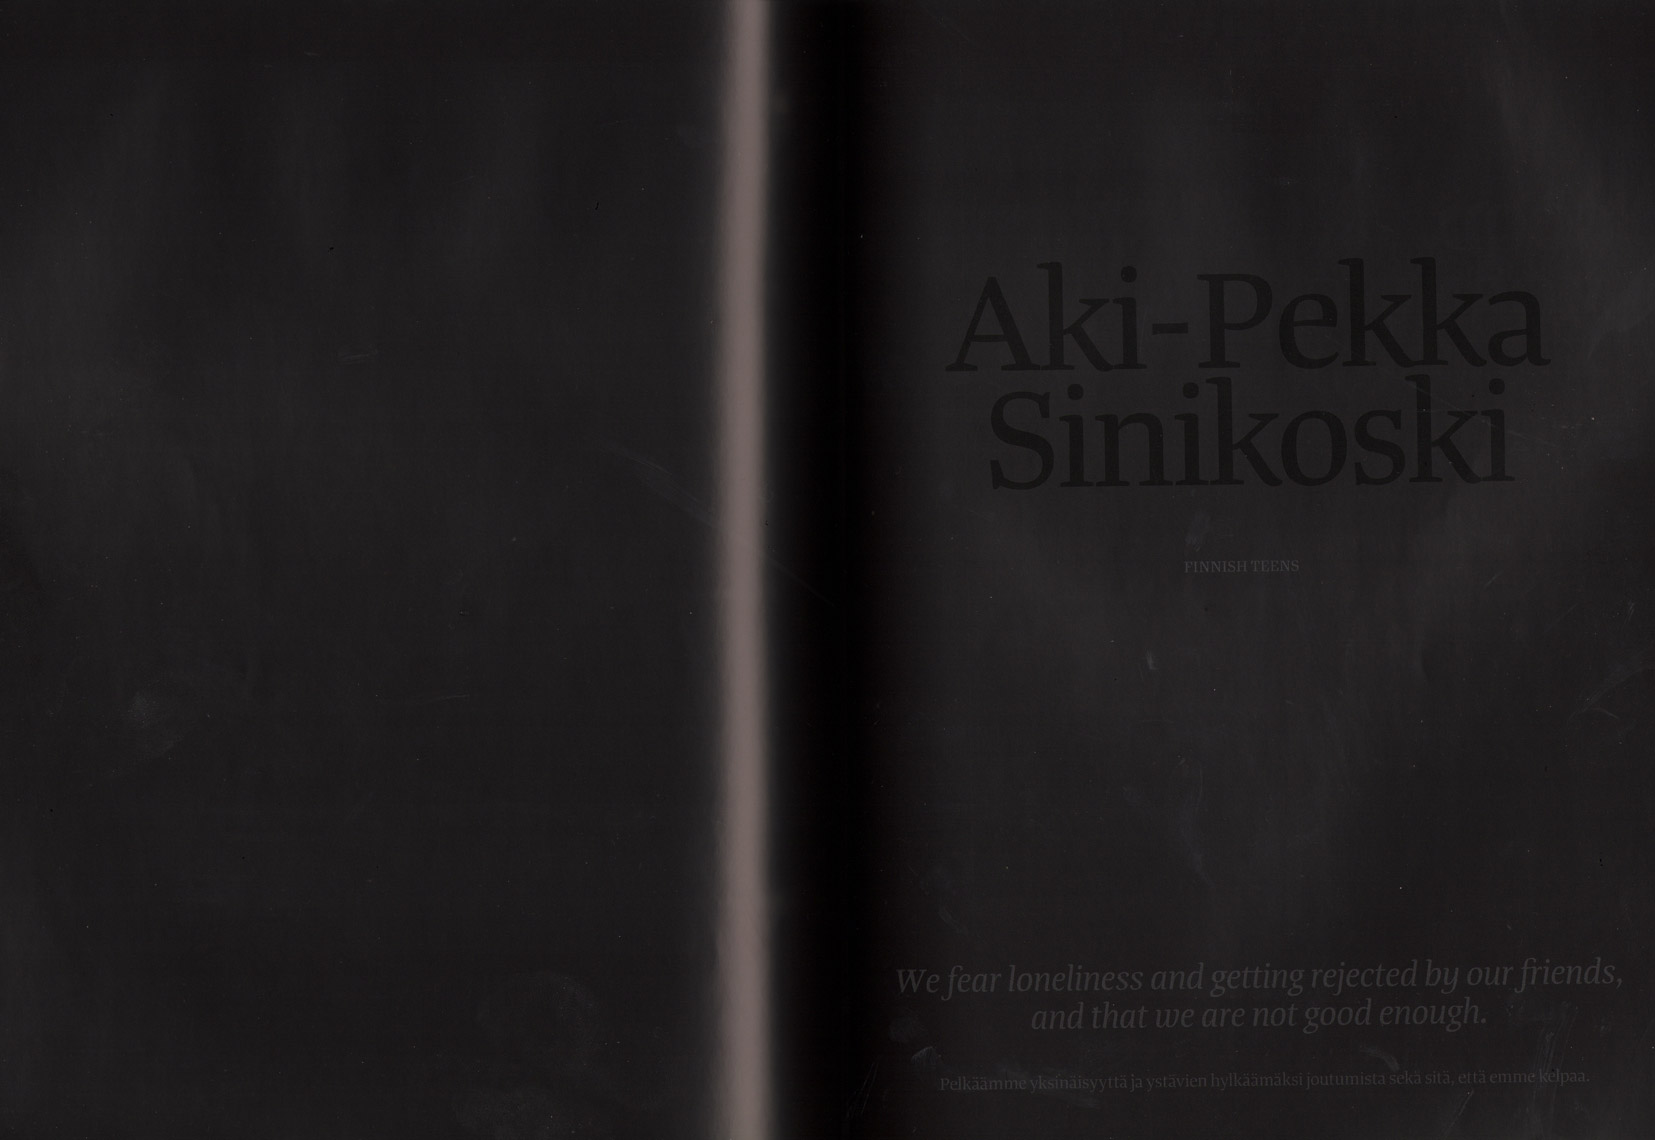 Aki-Pekka Sinikoski: Finnish Teens. Cover story in Photo RAW magazine. 